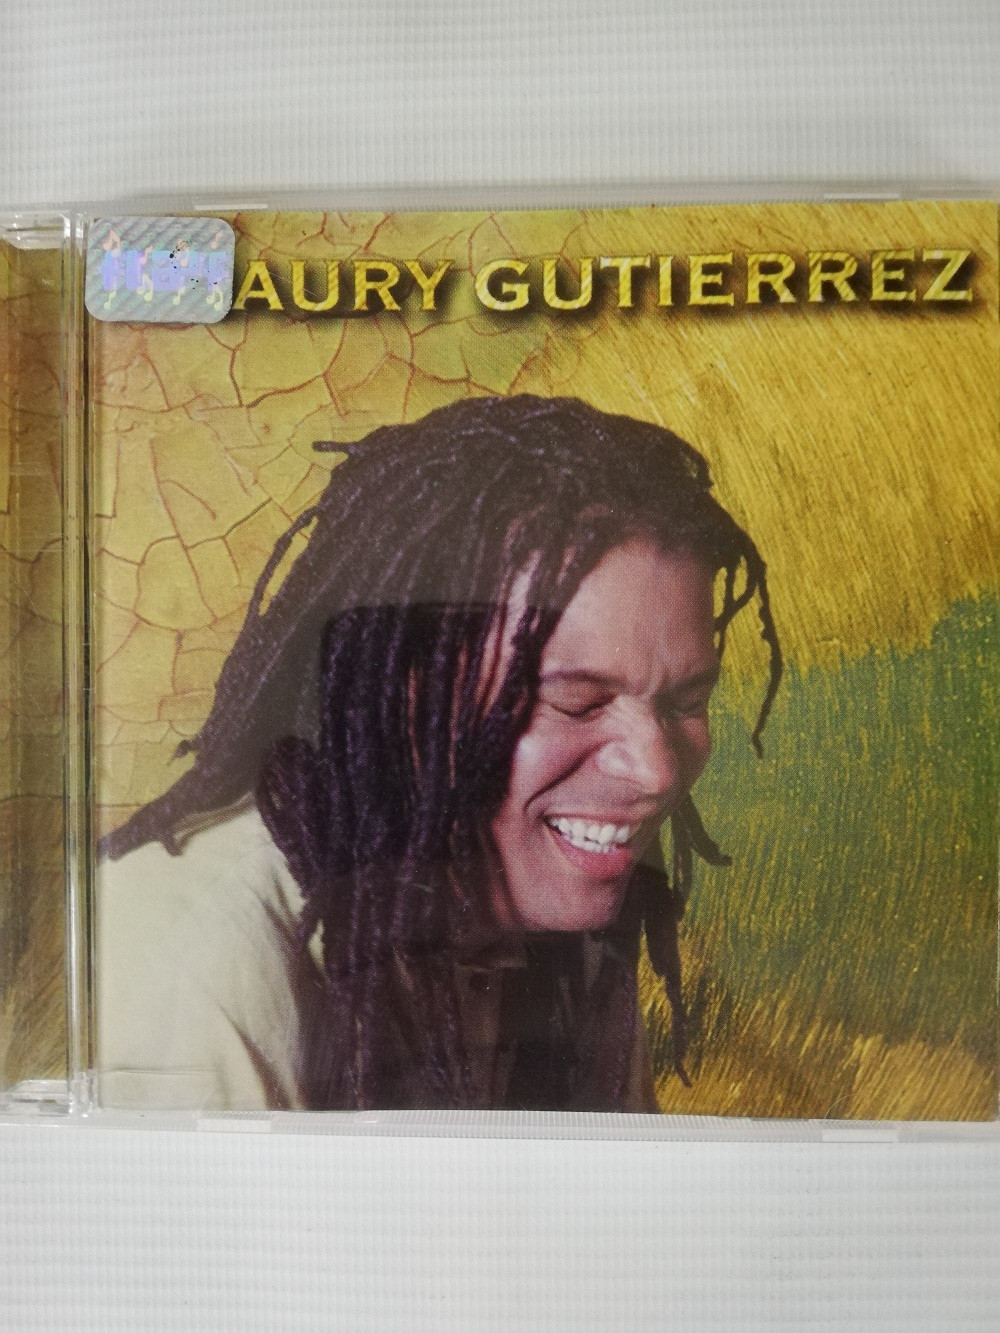 Imagen CD AMAURY GUTIERREZ - AMAURY GUTIERREZ